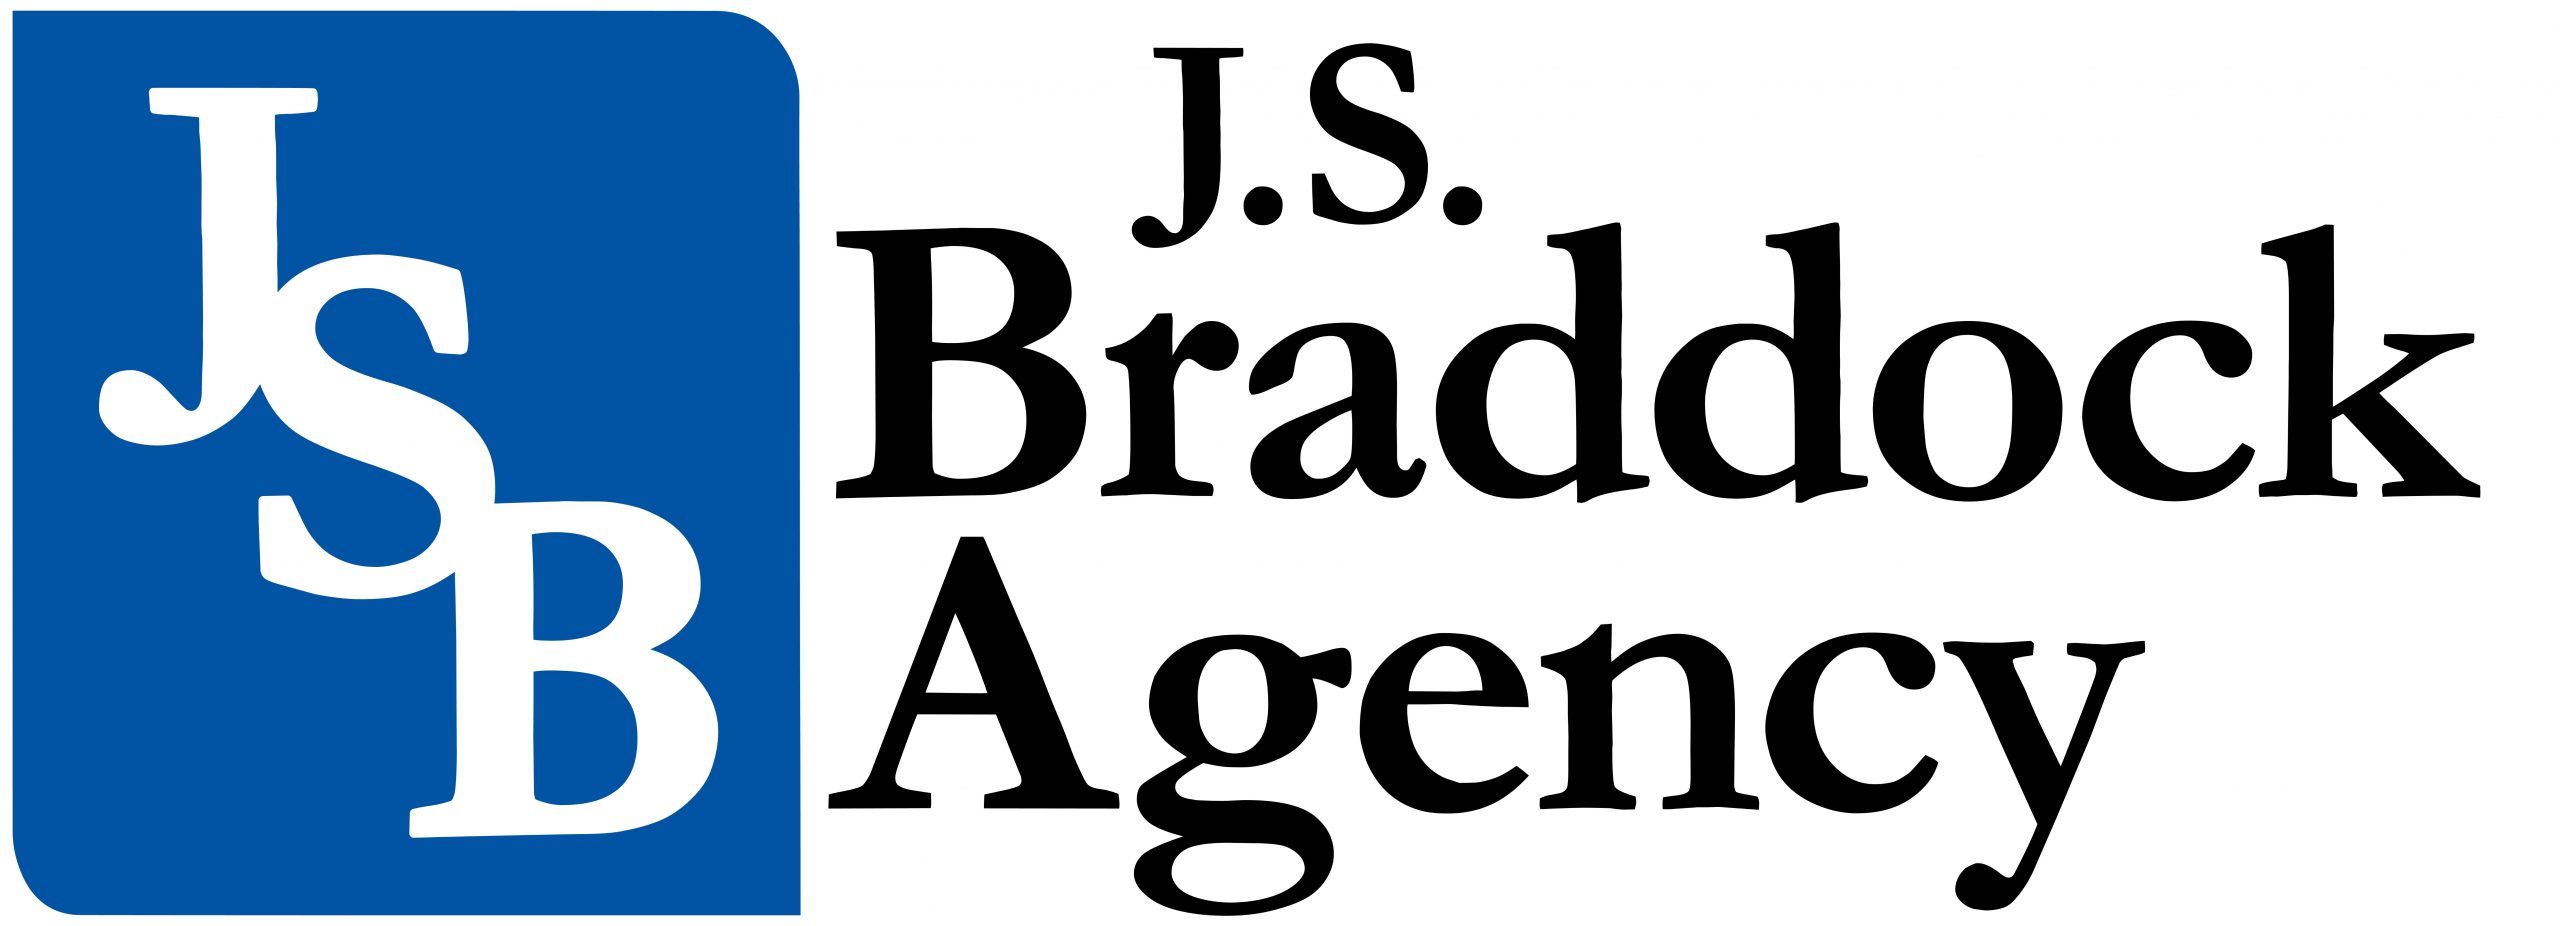 J.S. Braddock Agency Icon